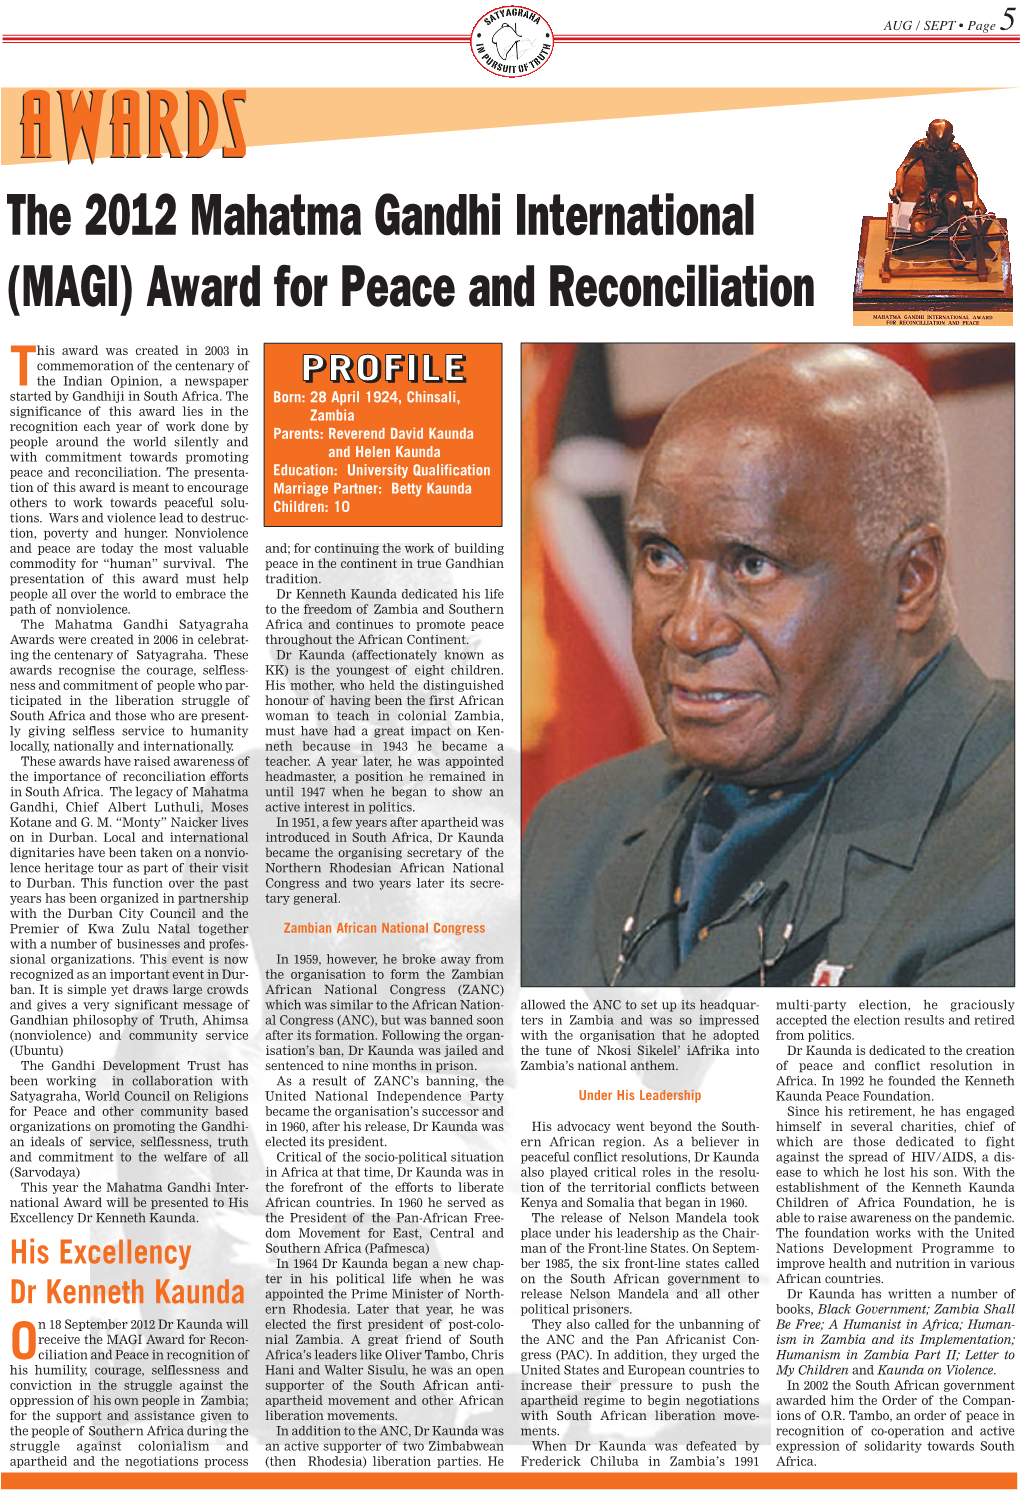 The 2012 Mahatma Gandhi International (MAGI) Award for Peace and Reconciliation